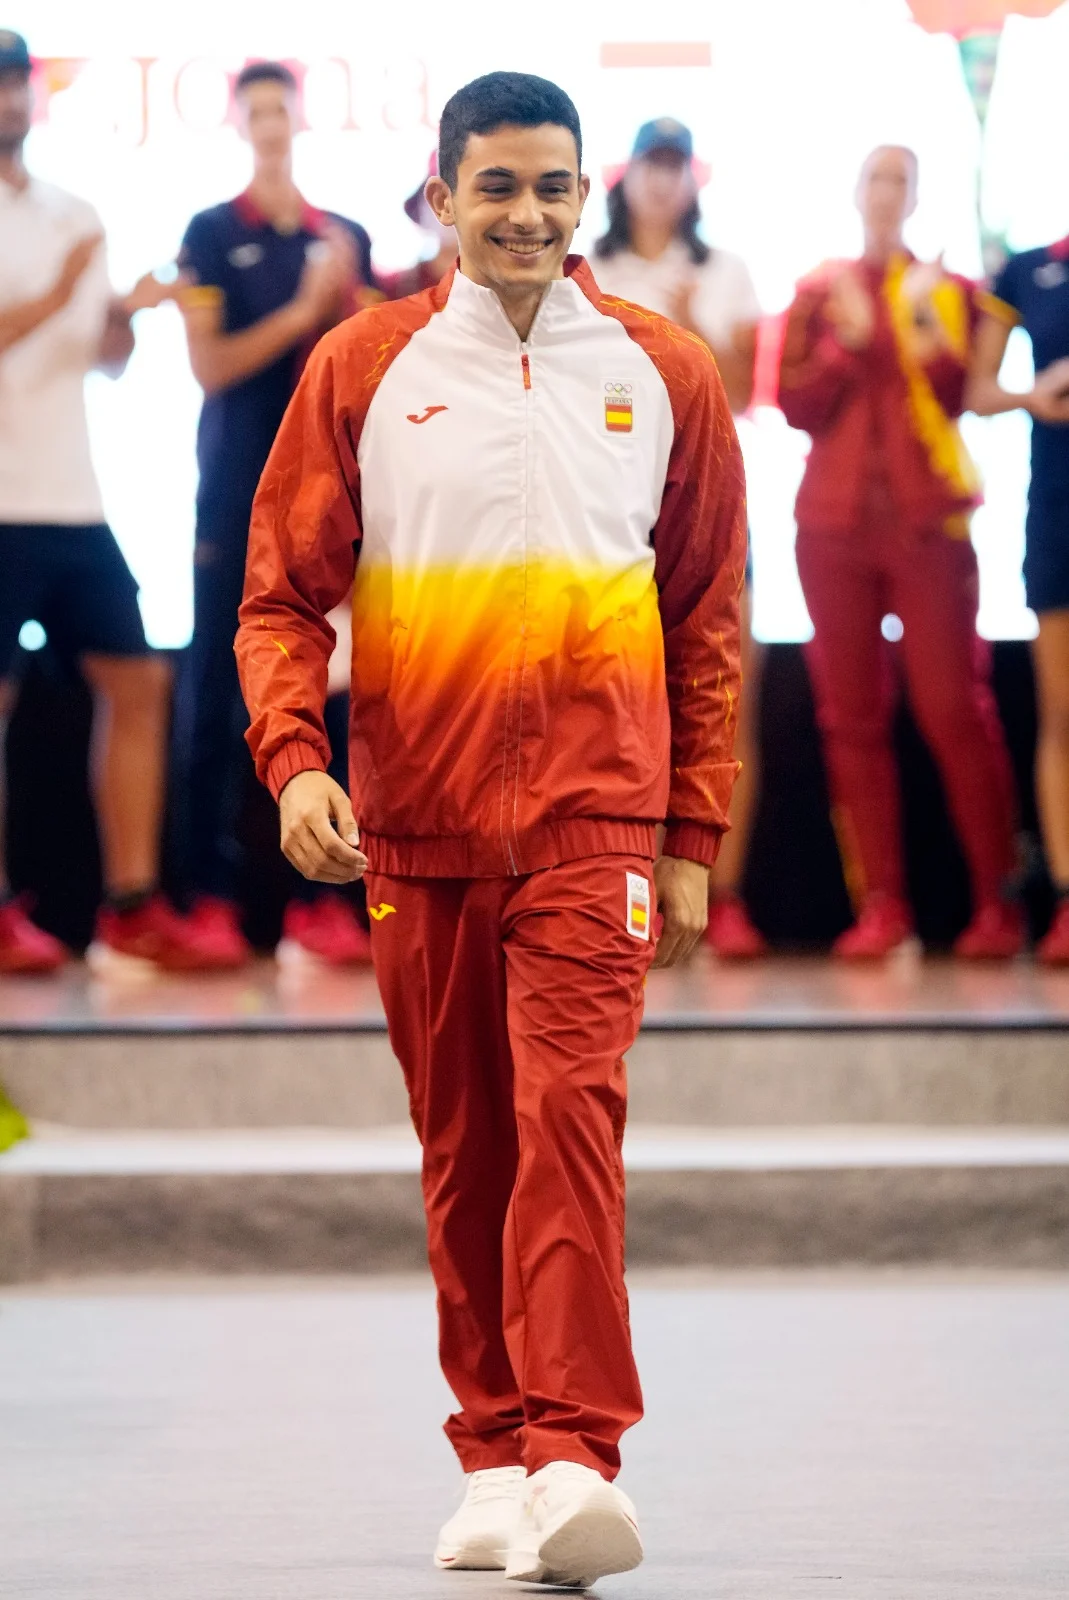 chandal uniforme seleccion espanola paris 2024 olimpiadas 2